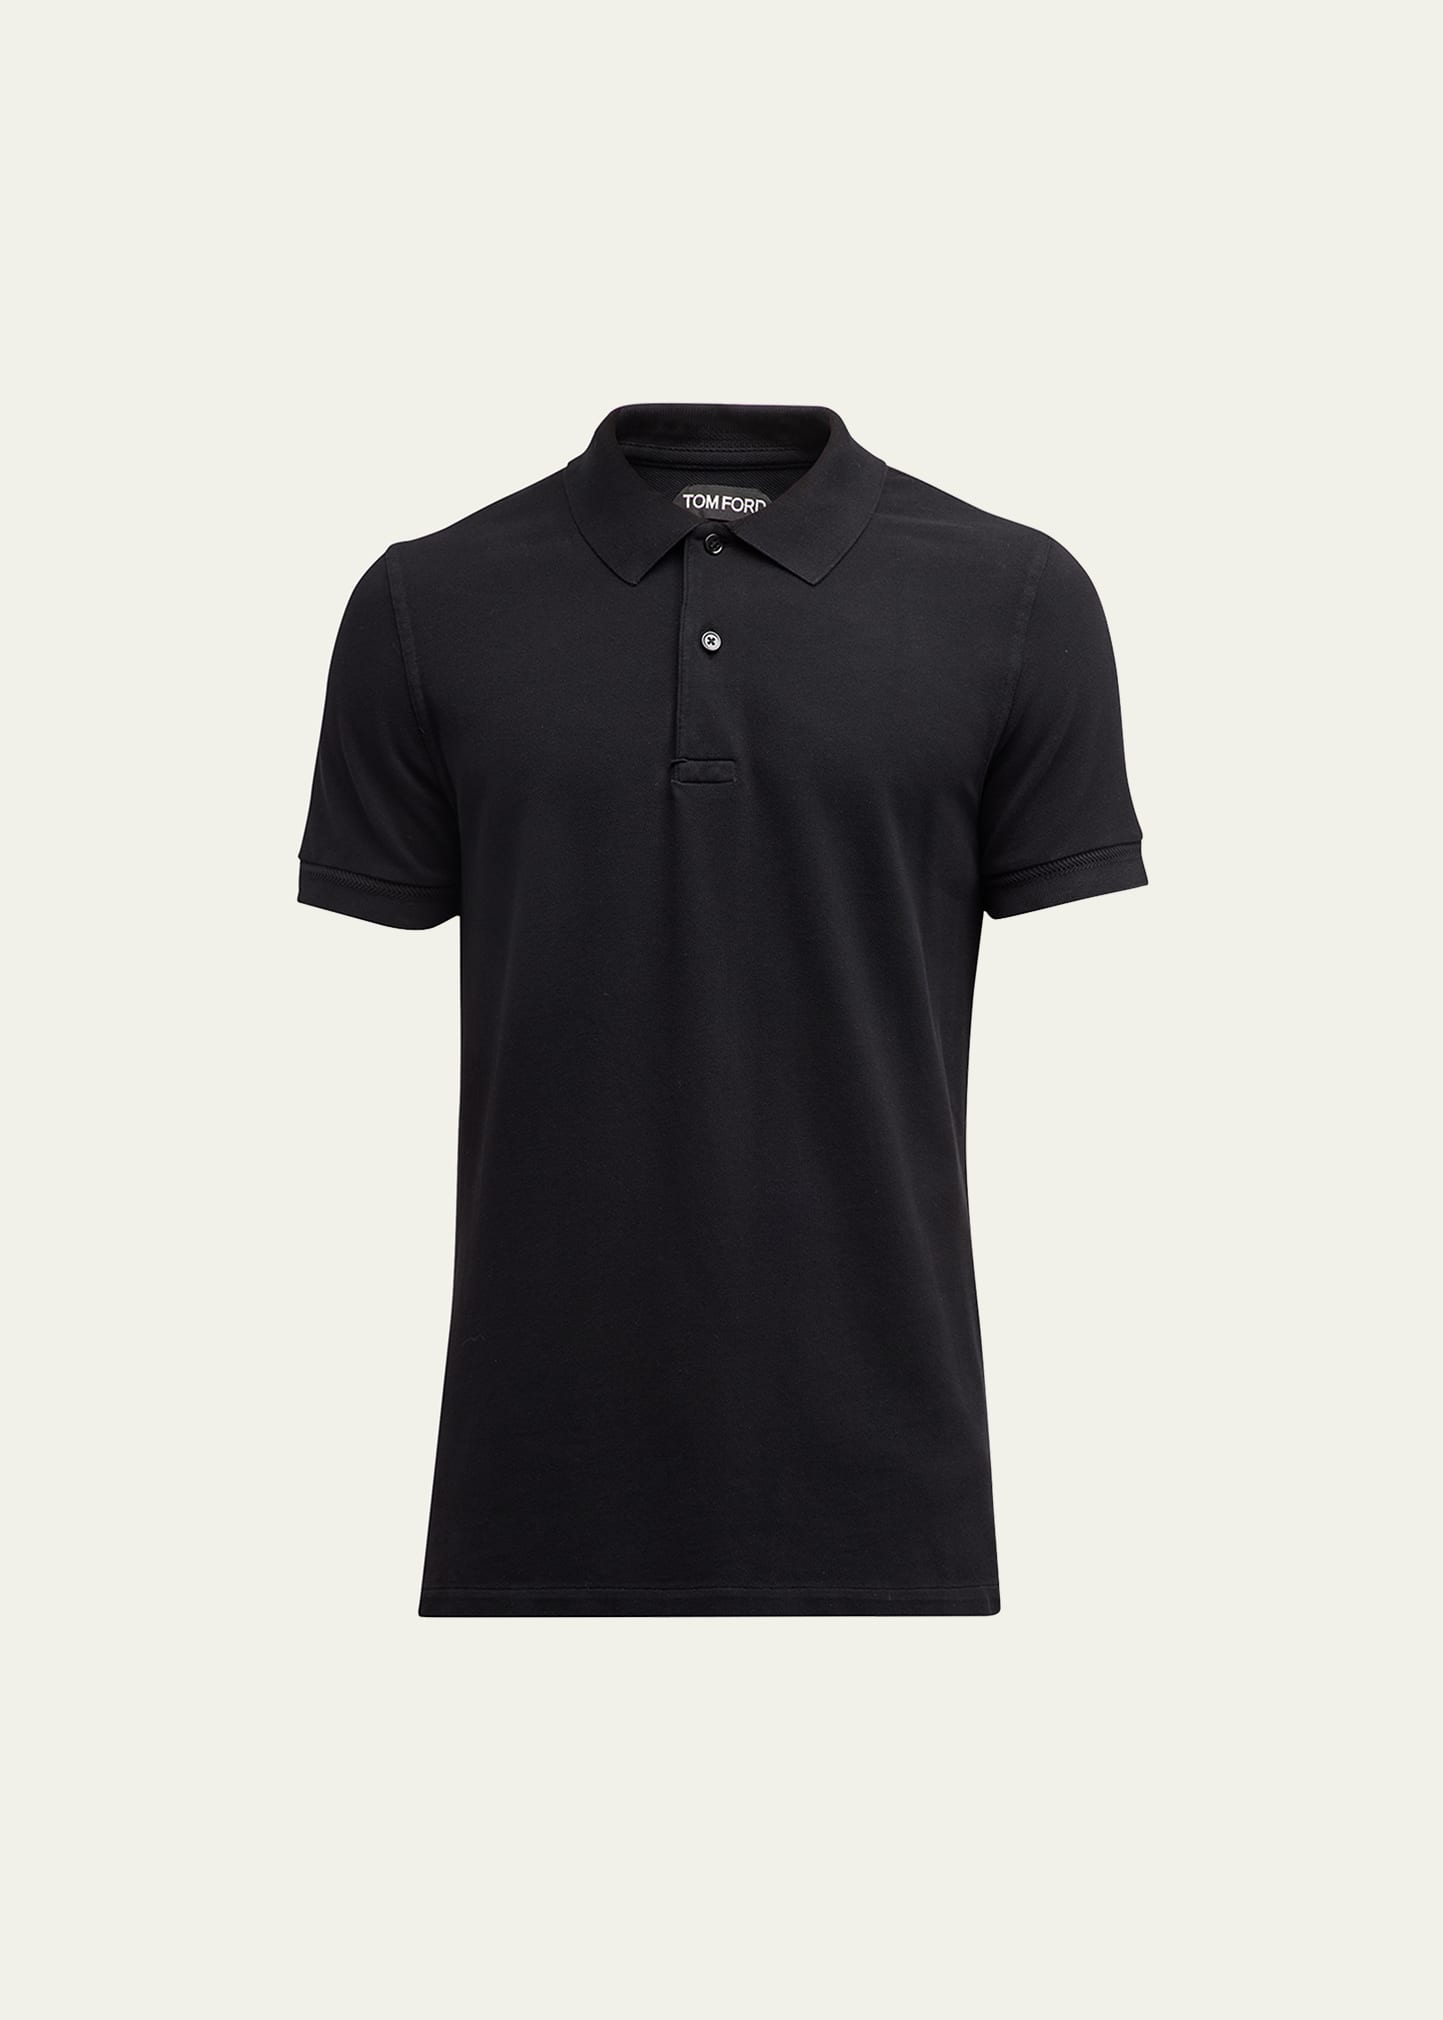 Tom Ford Men's Cotton Pique Polo Shirt In Black